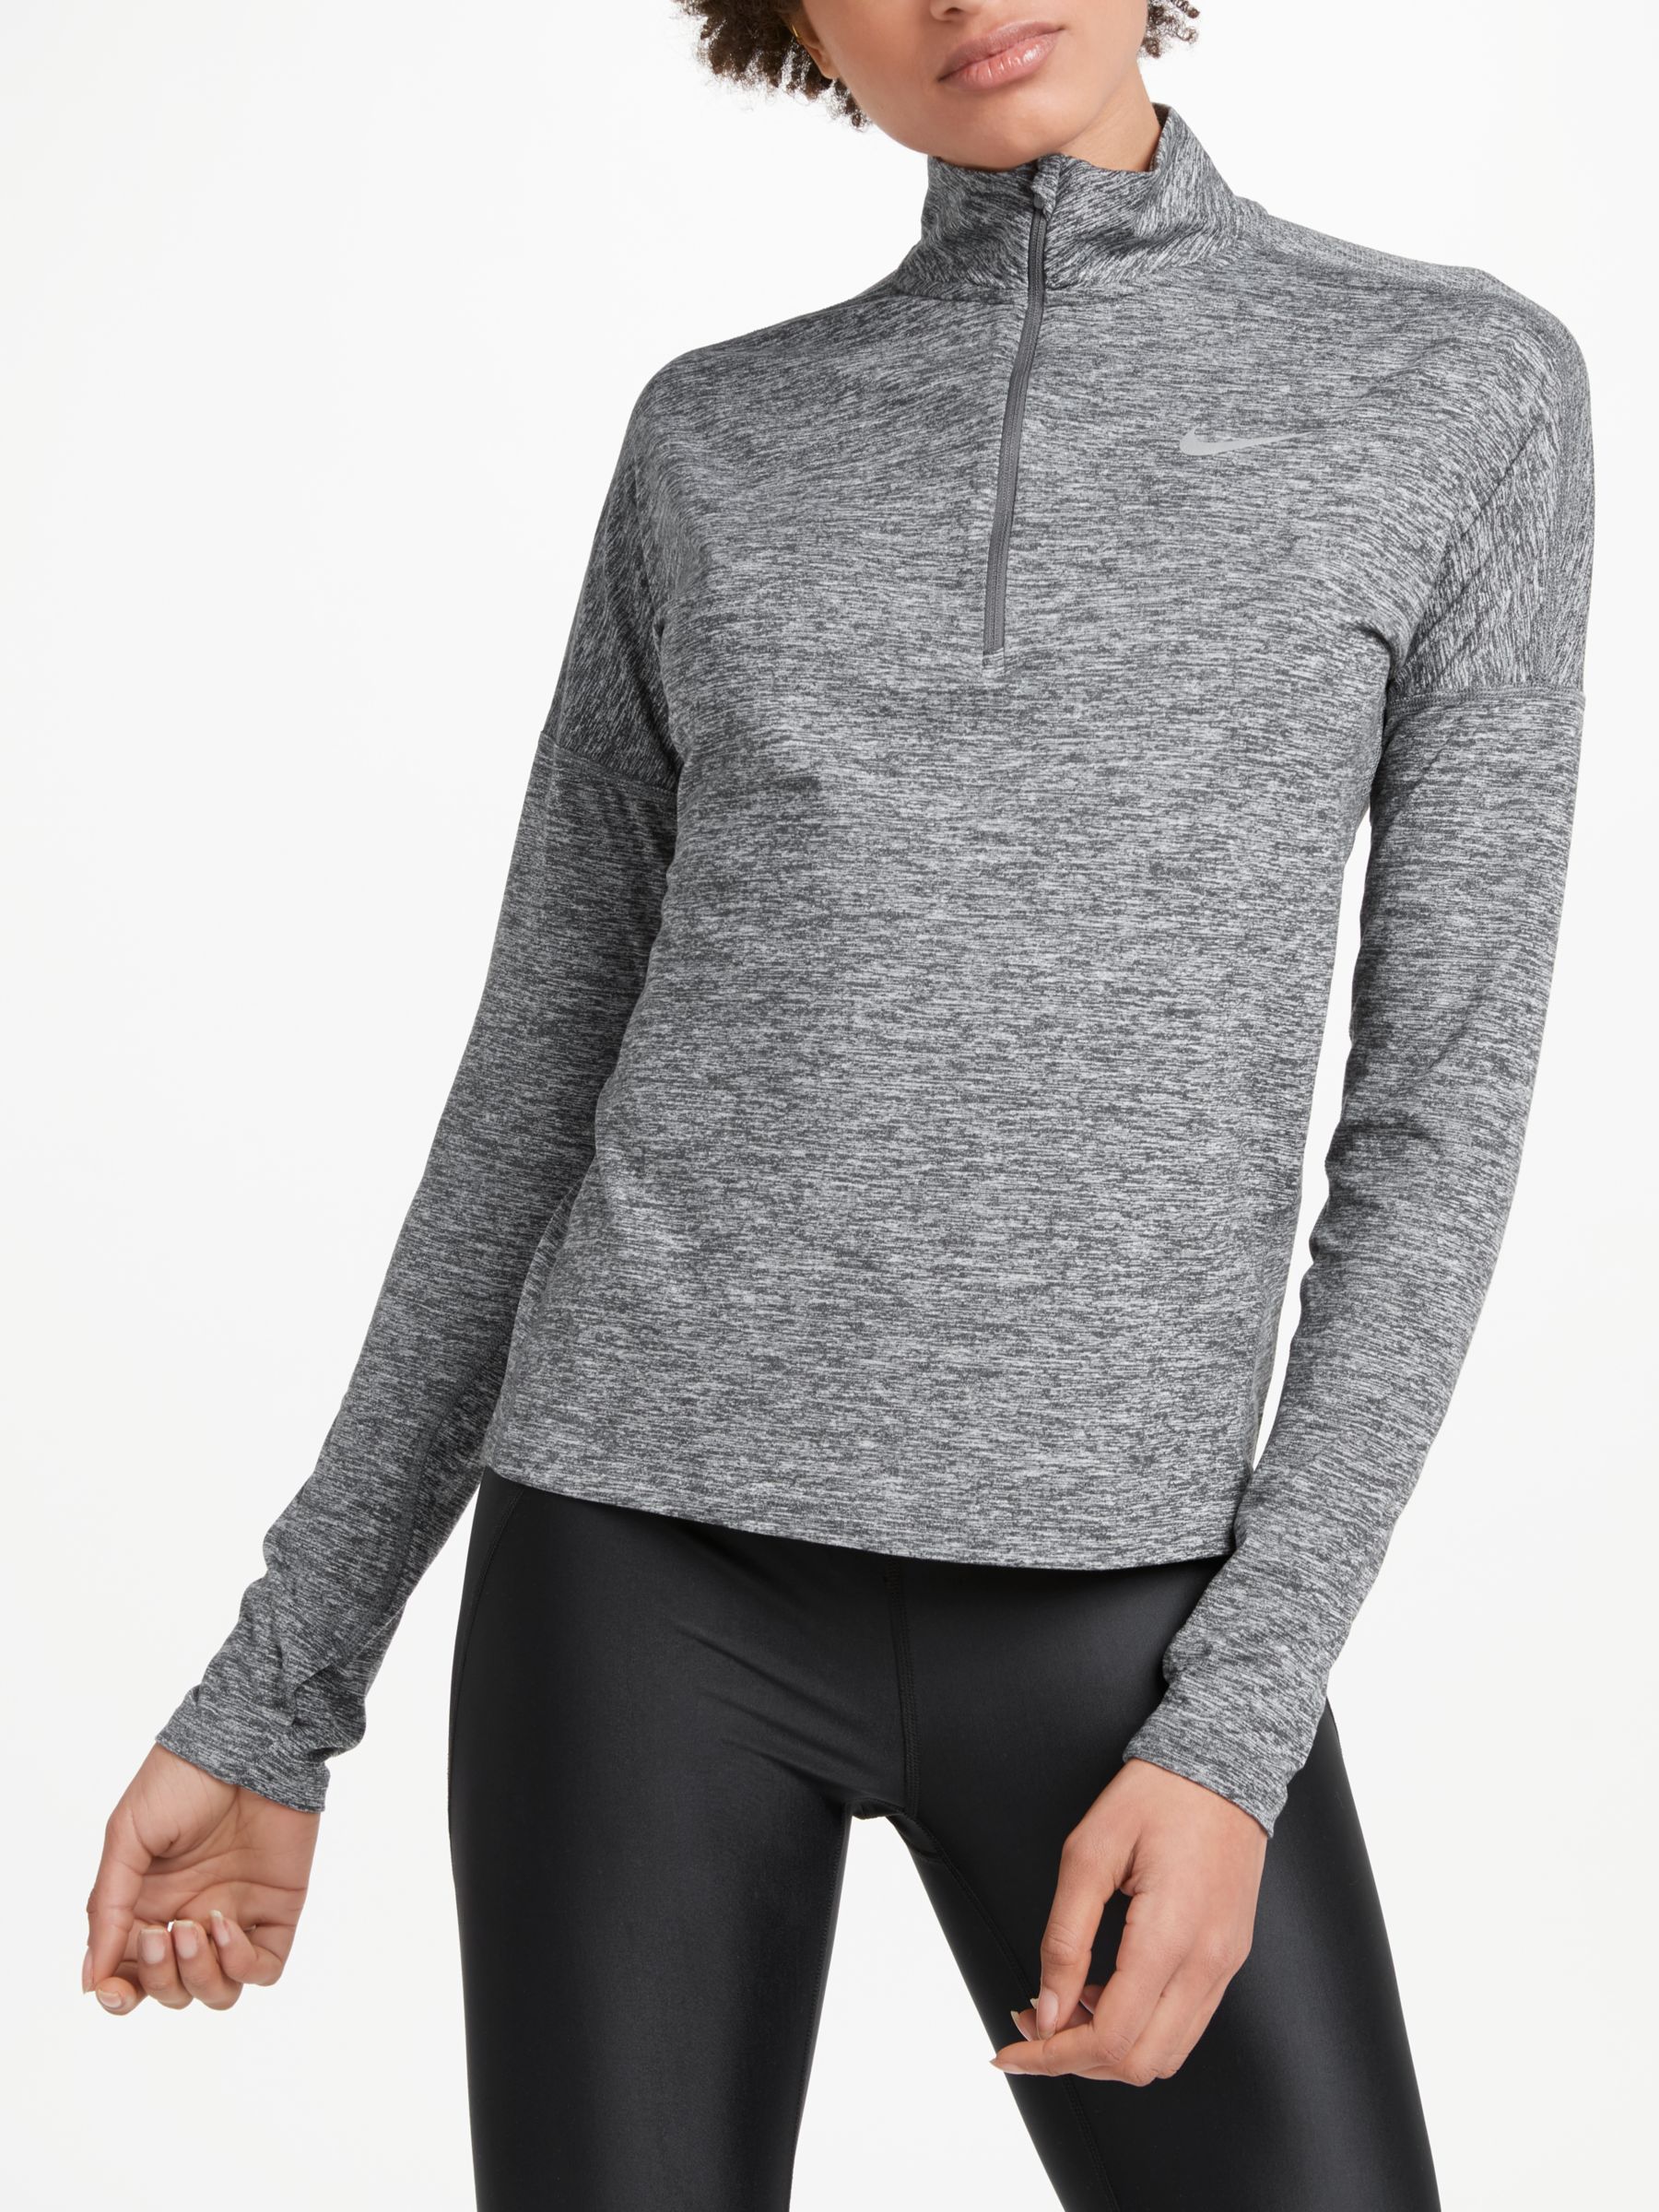 Nike Dry Element Long Sleeve Running T-Shirt, Dark Grey Heather, S